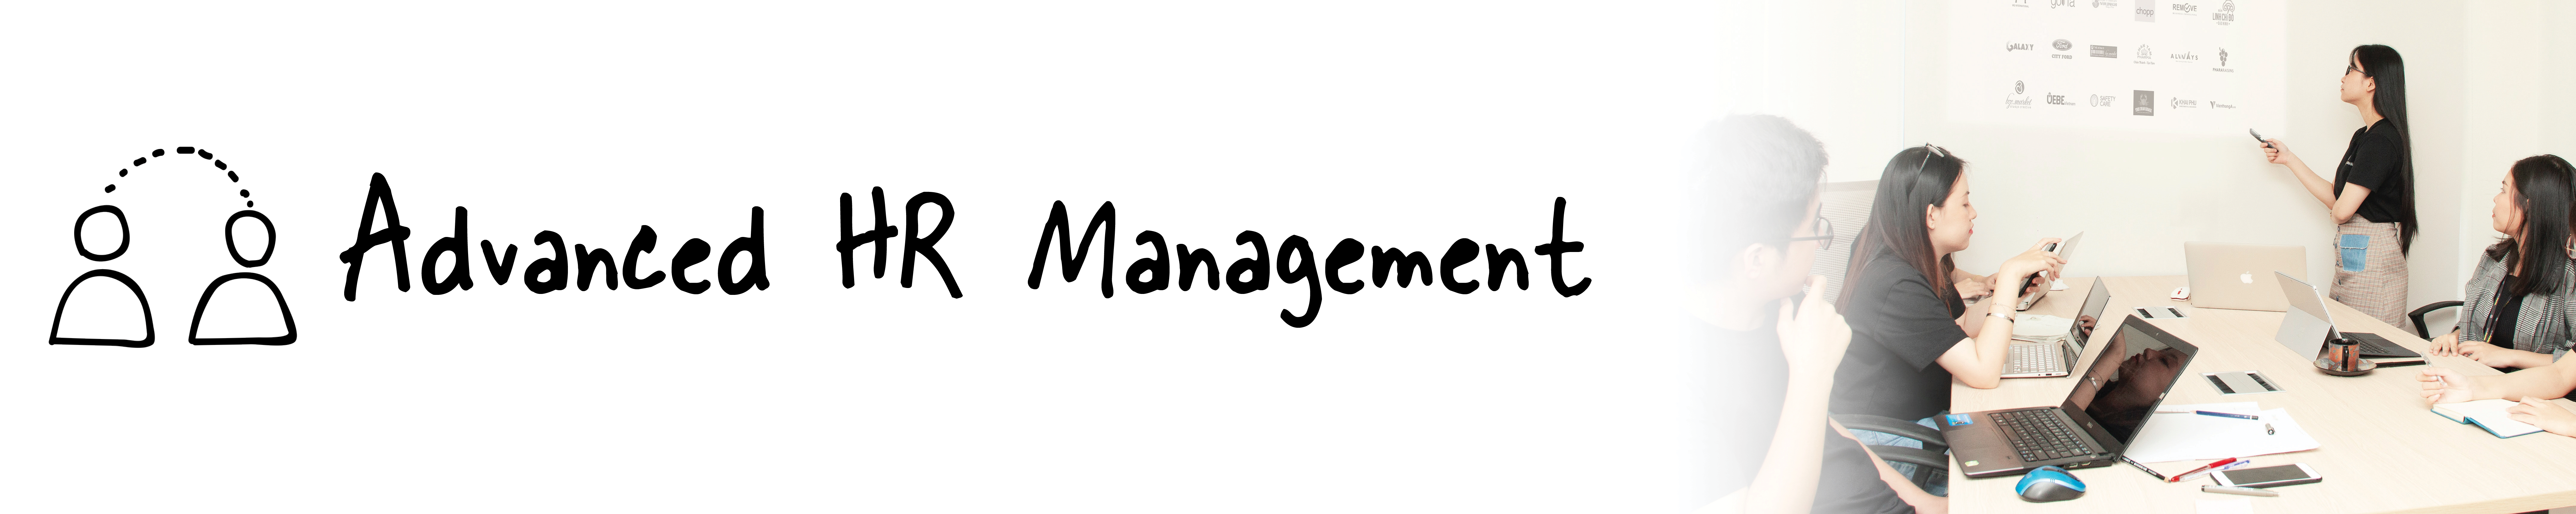 Advanced HR Management